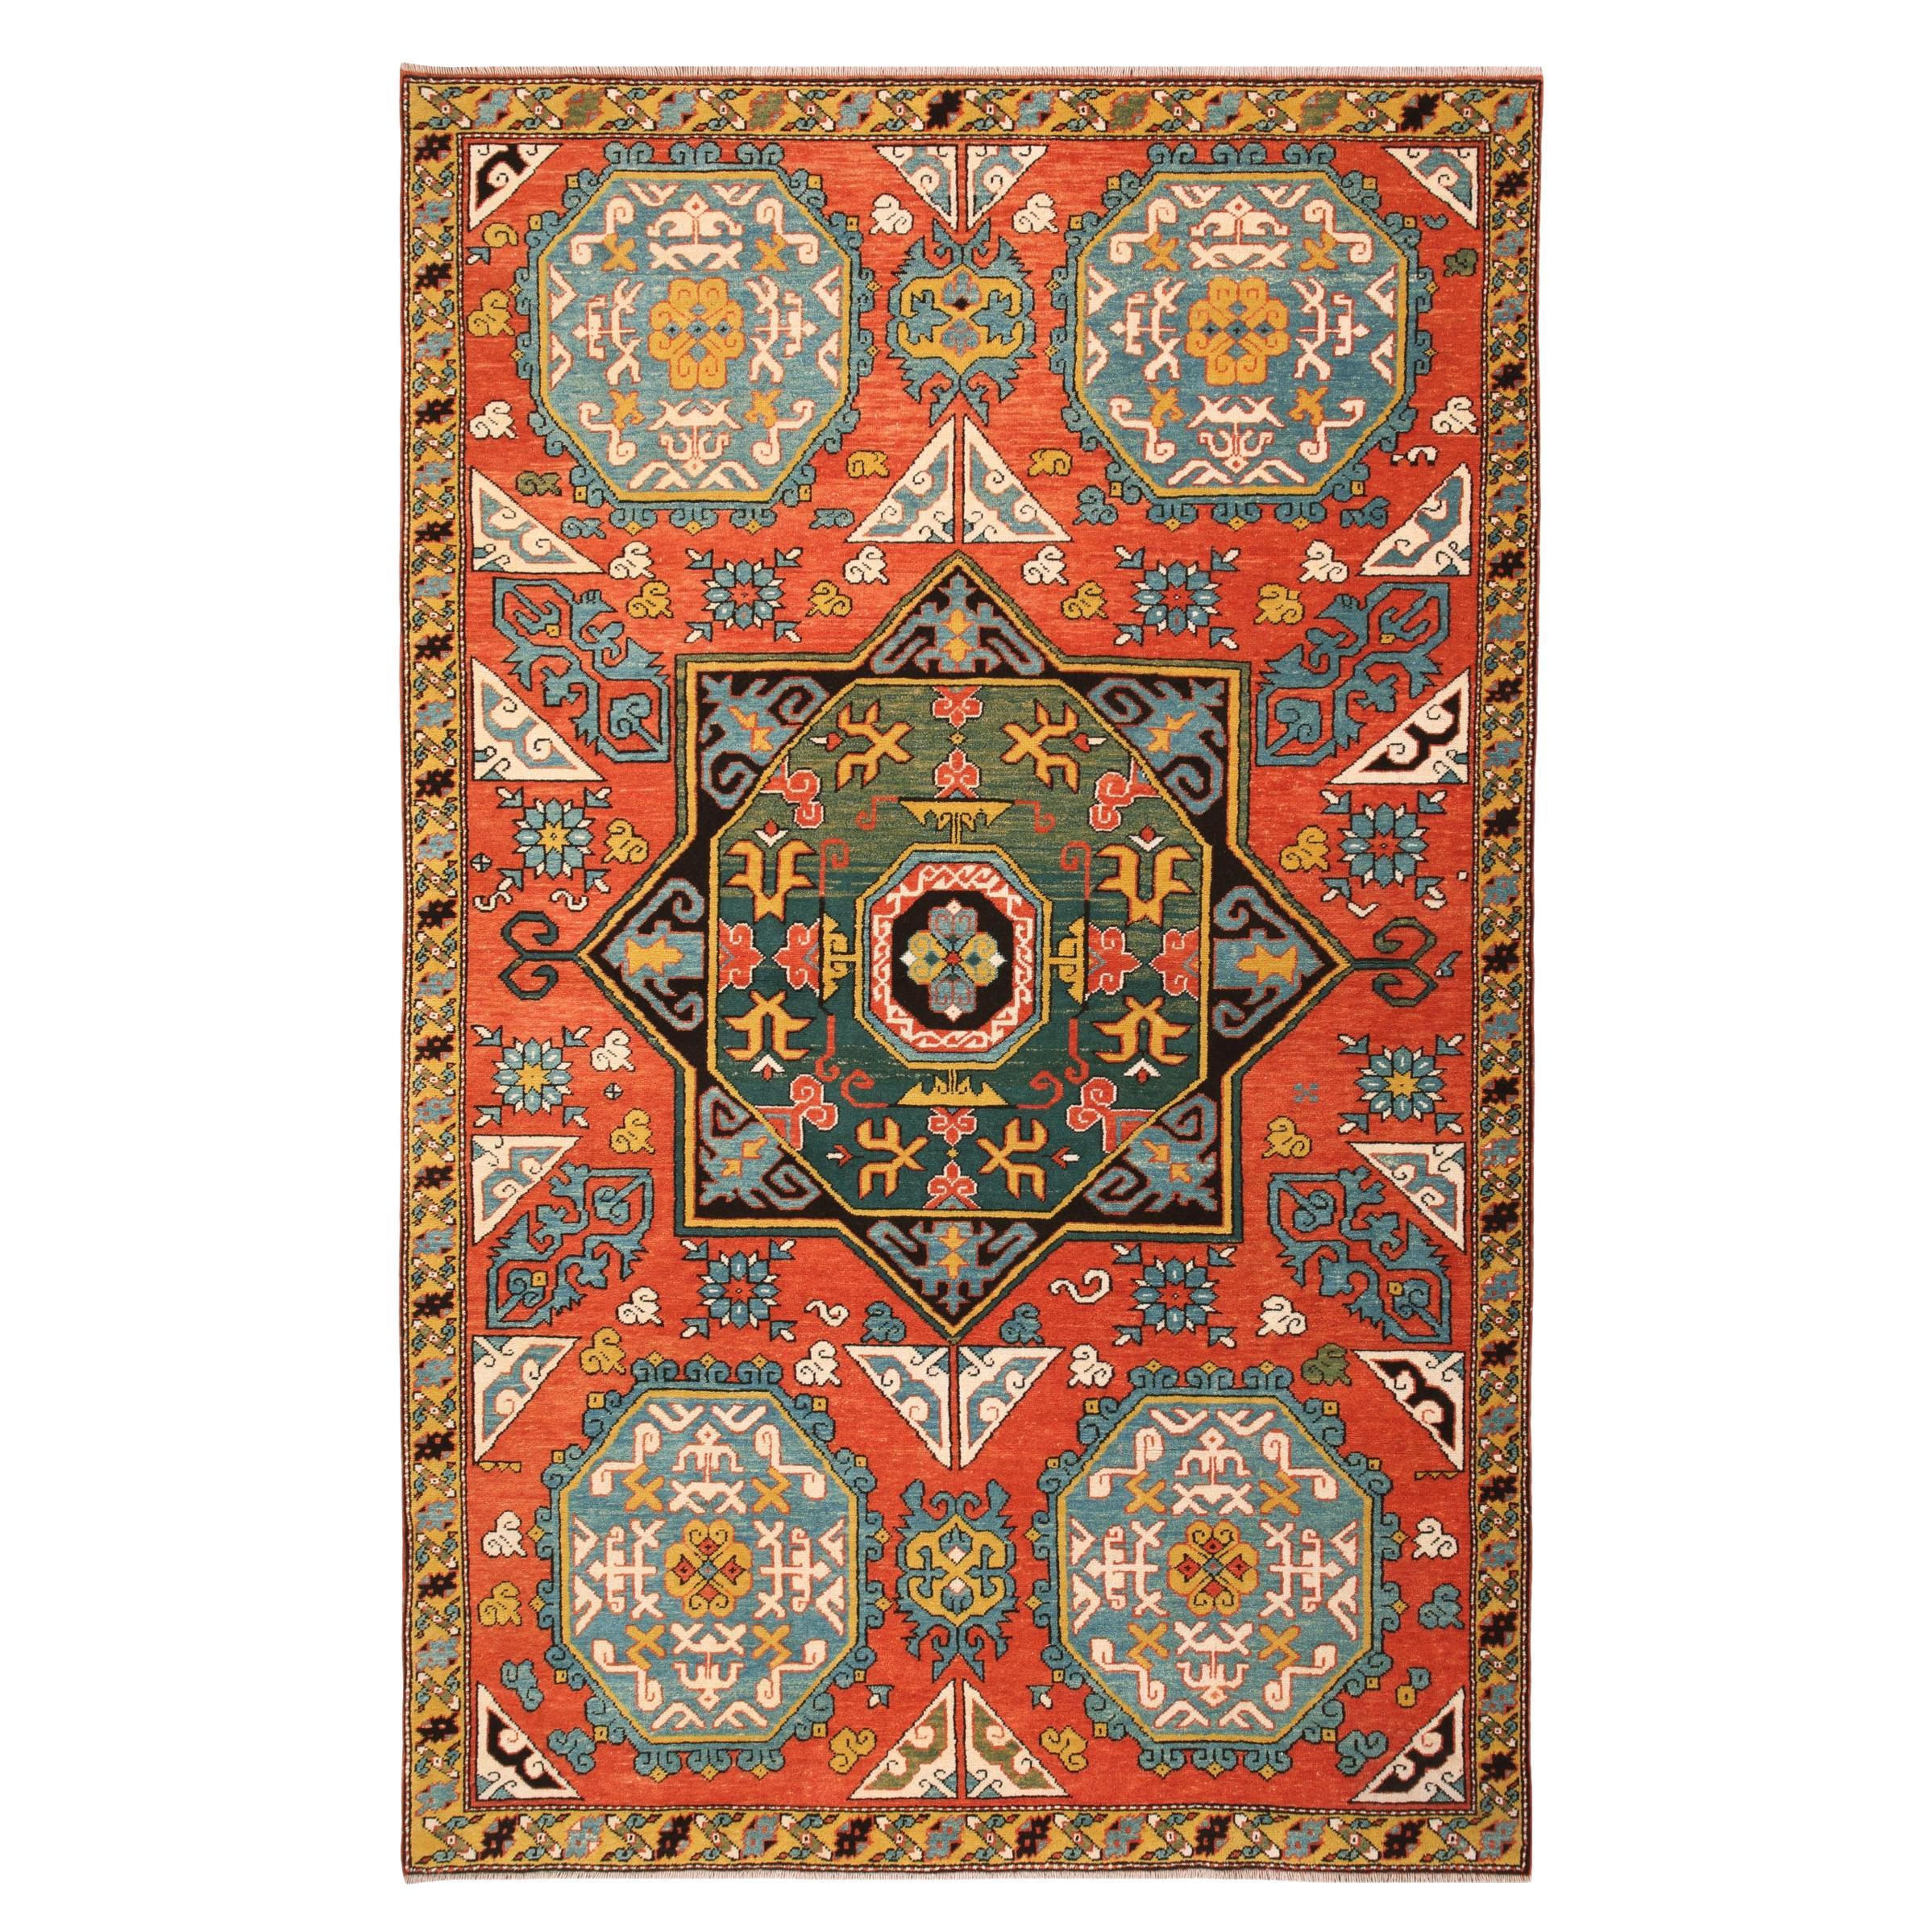 Ararat Rugs Star and Octagon Medallion Carpet Anatolian Revival Rug Natural Dyed